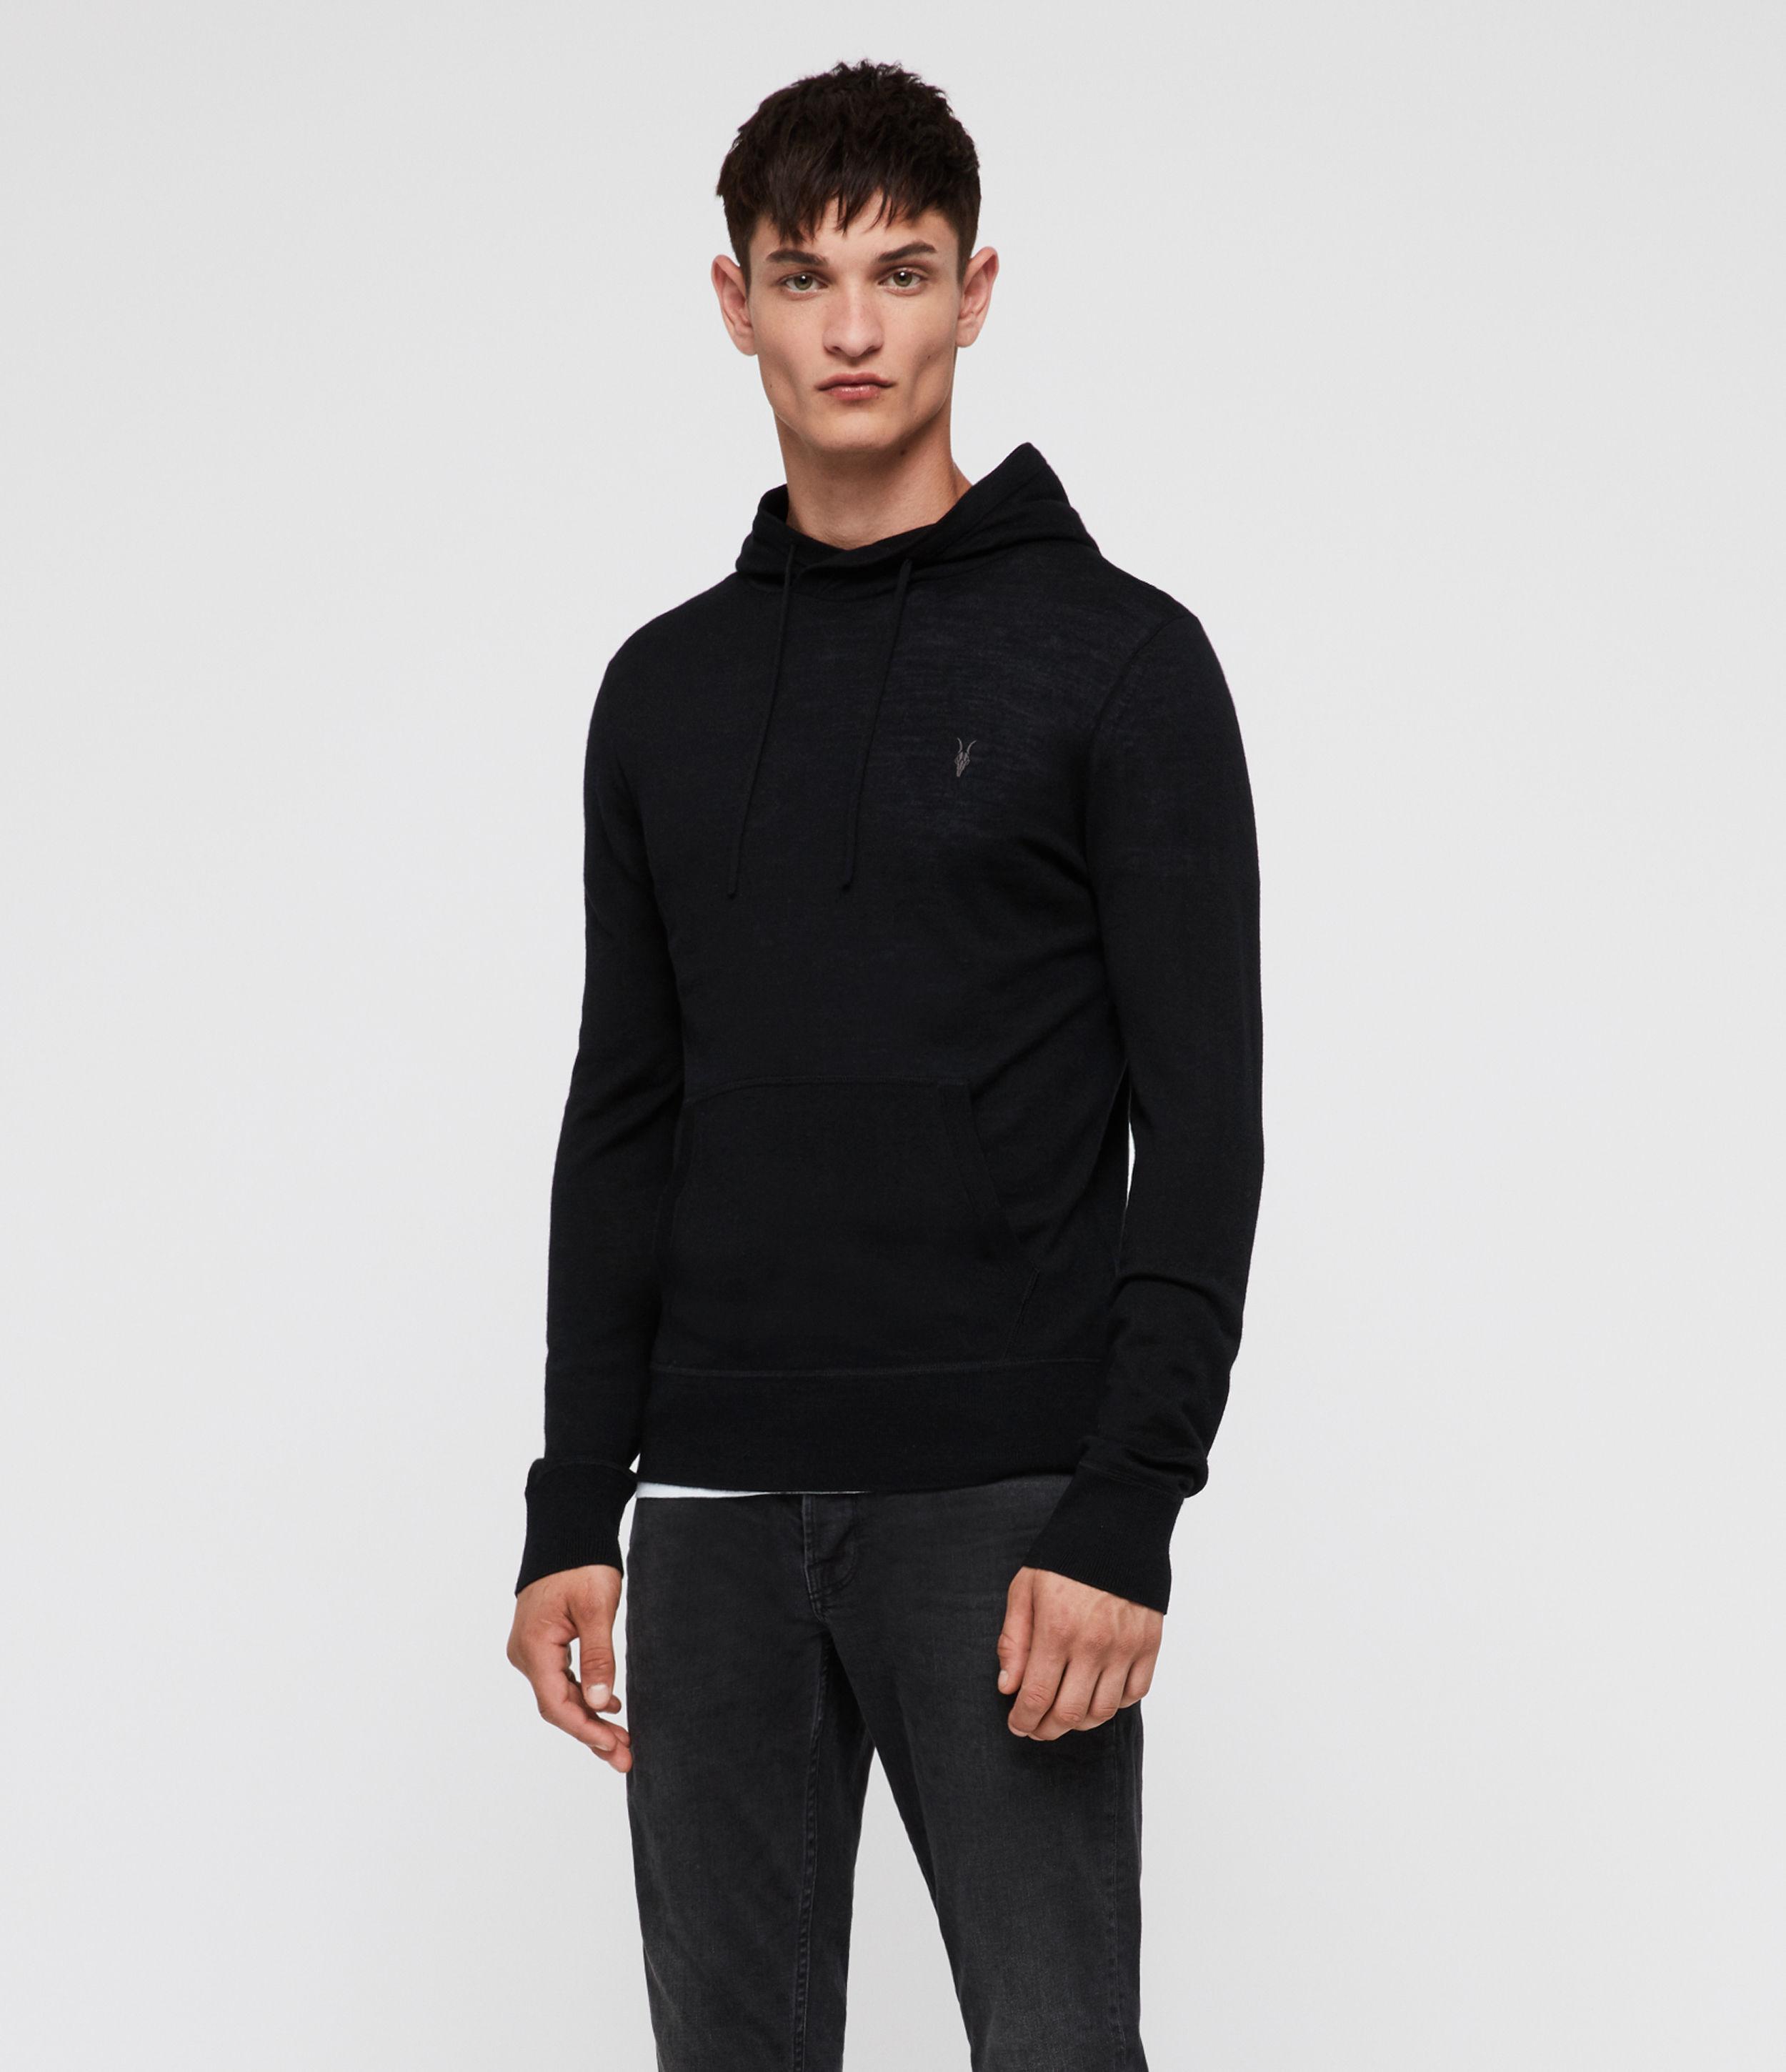 AllSaints Wool Mode Merino Pullover Hoodie in Black for Men - Lyst